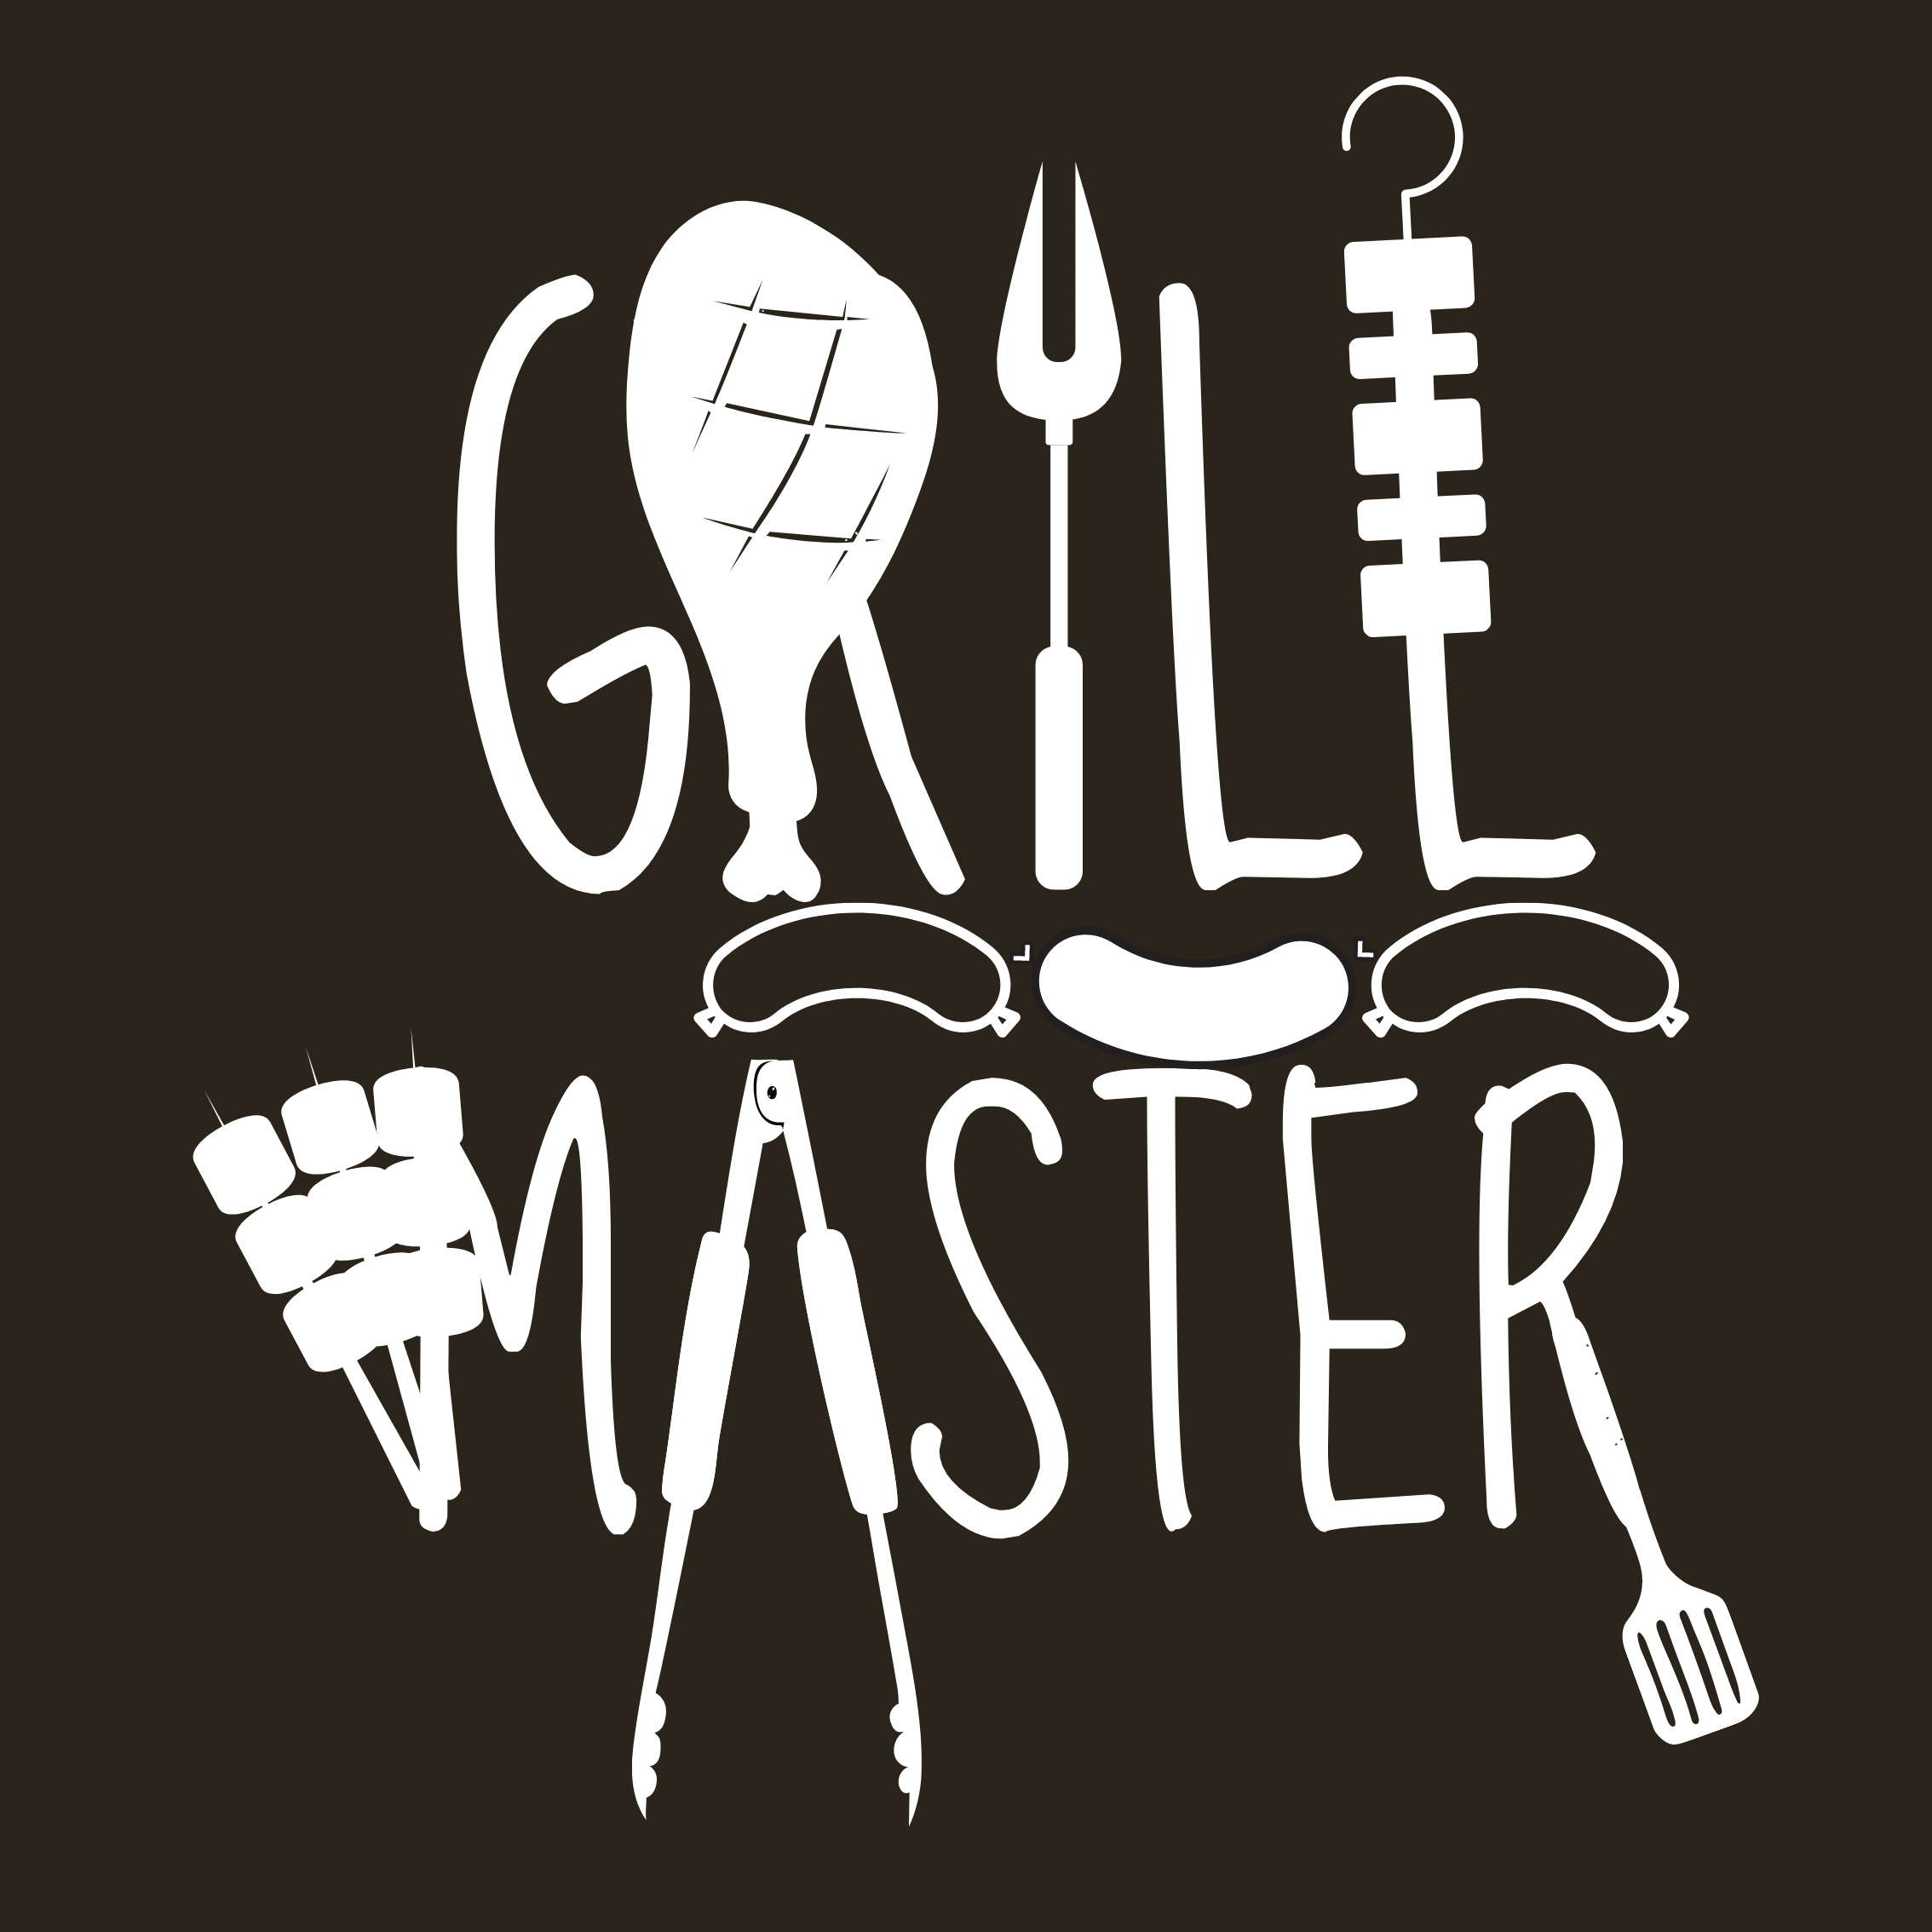 Design Grill Master